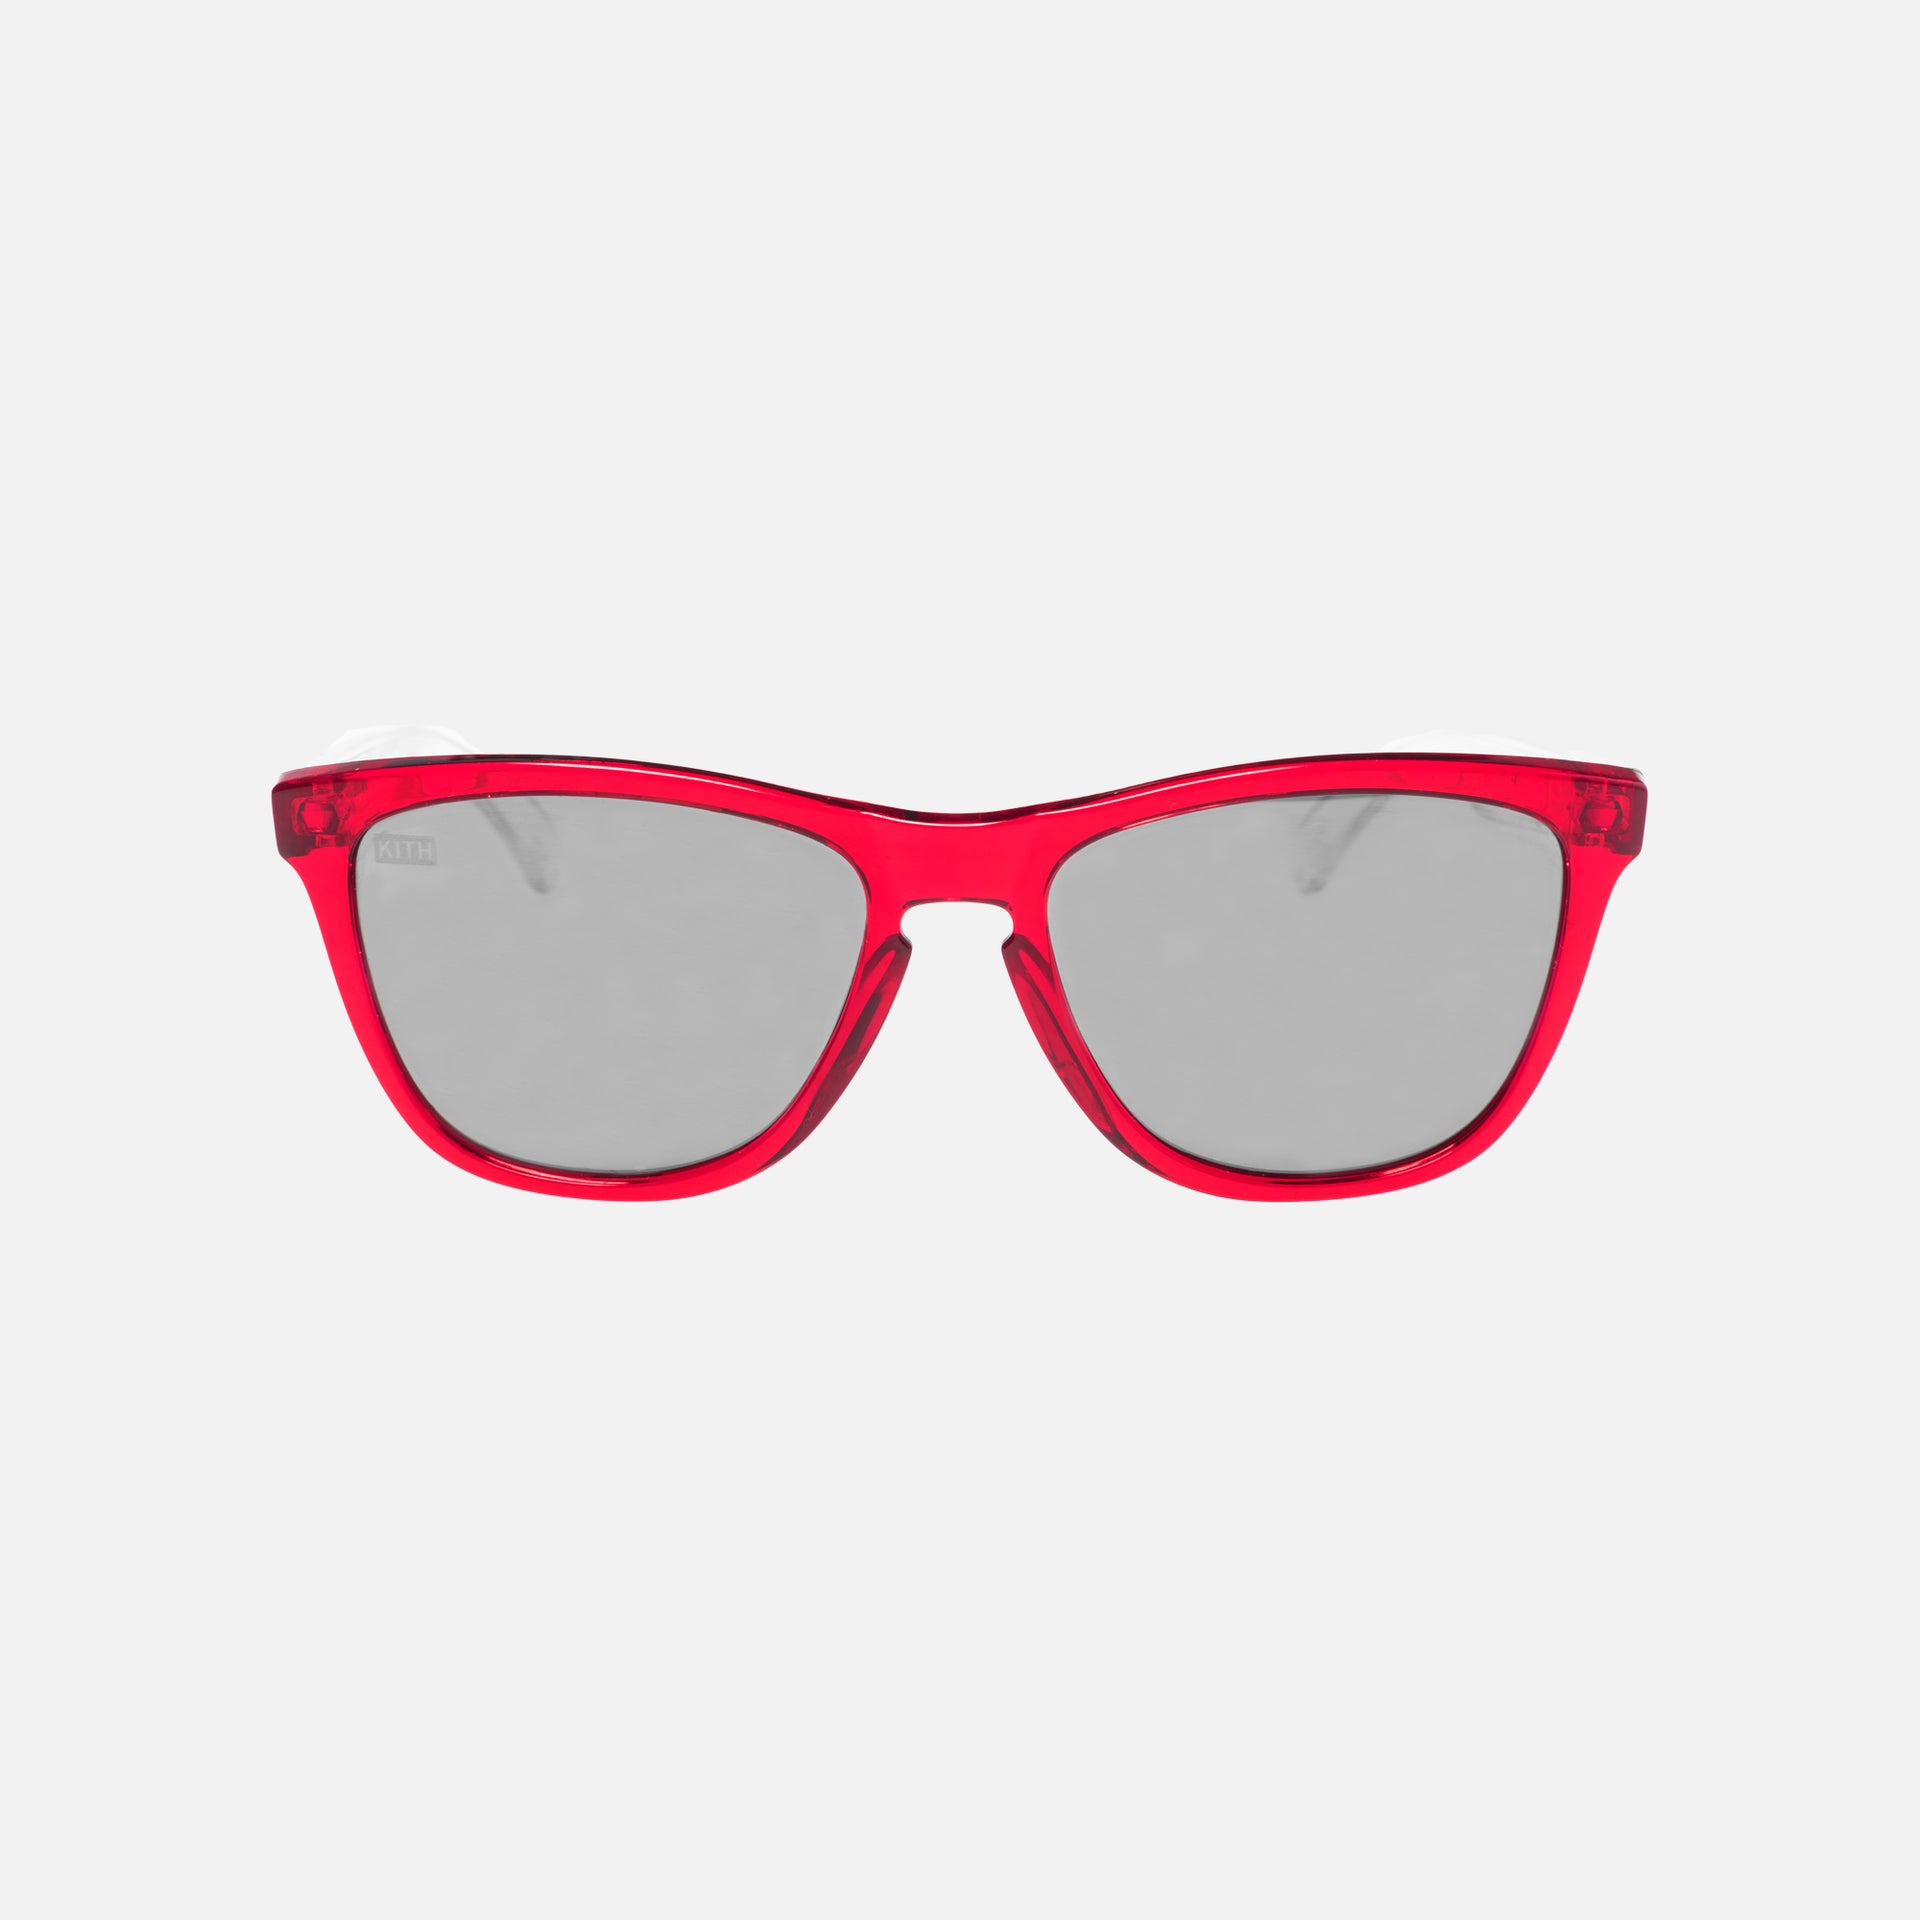 Kith x Oakley Prizm Frogskin Sunglasses - Red / Black